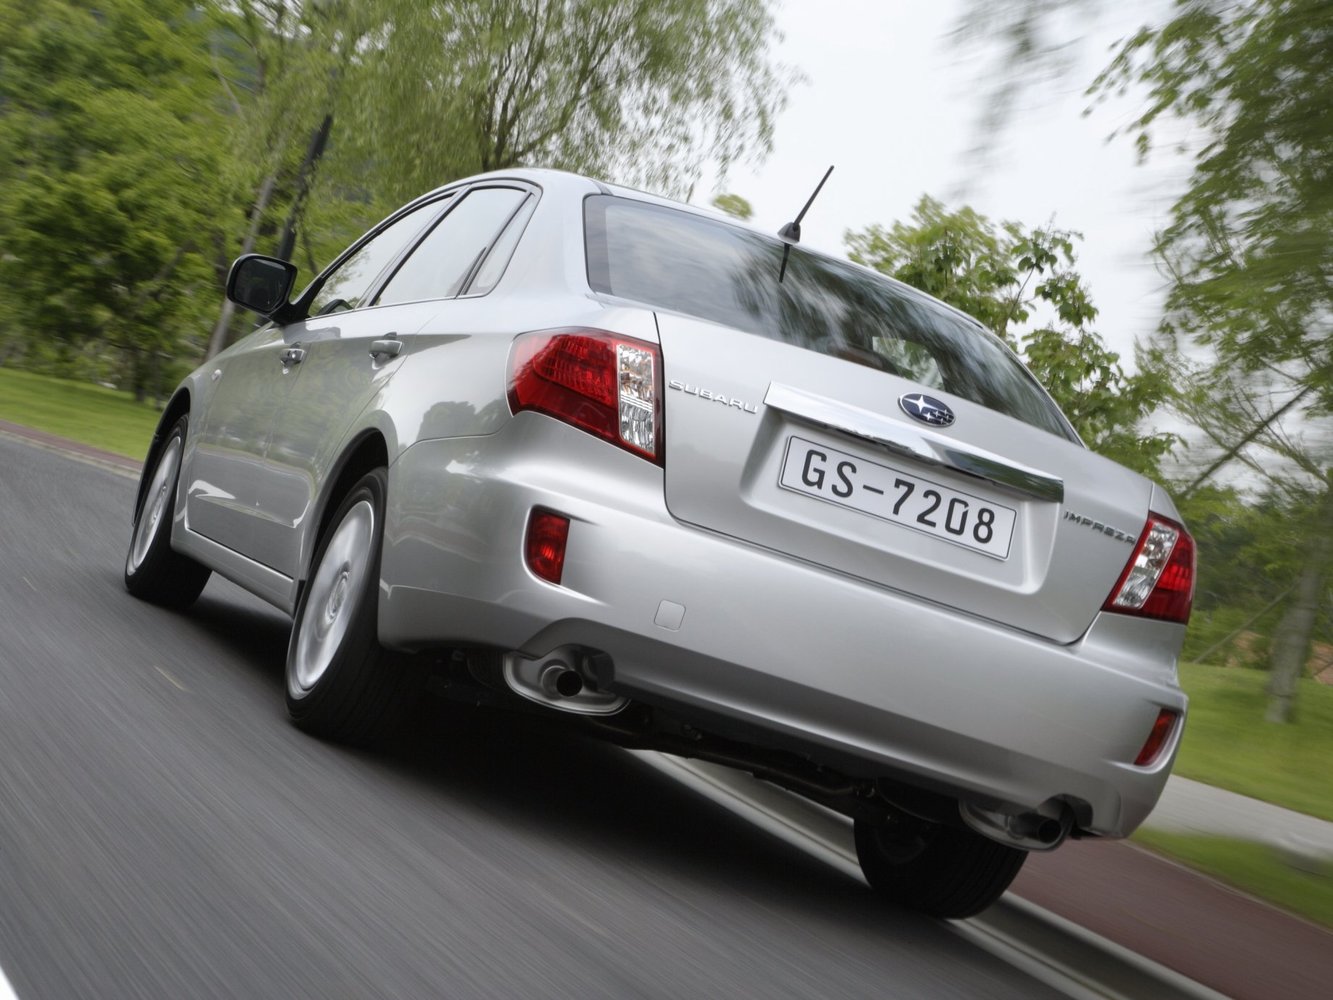 седан Subaru Impreza 2007 - 2011г выпуска модификация 1.5 AT (107 л.с.)